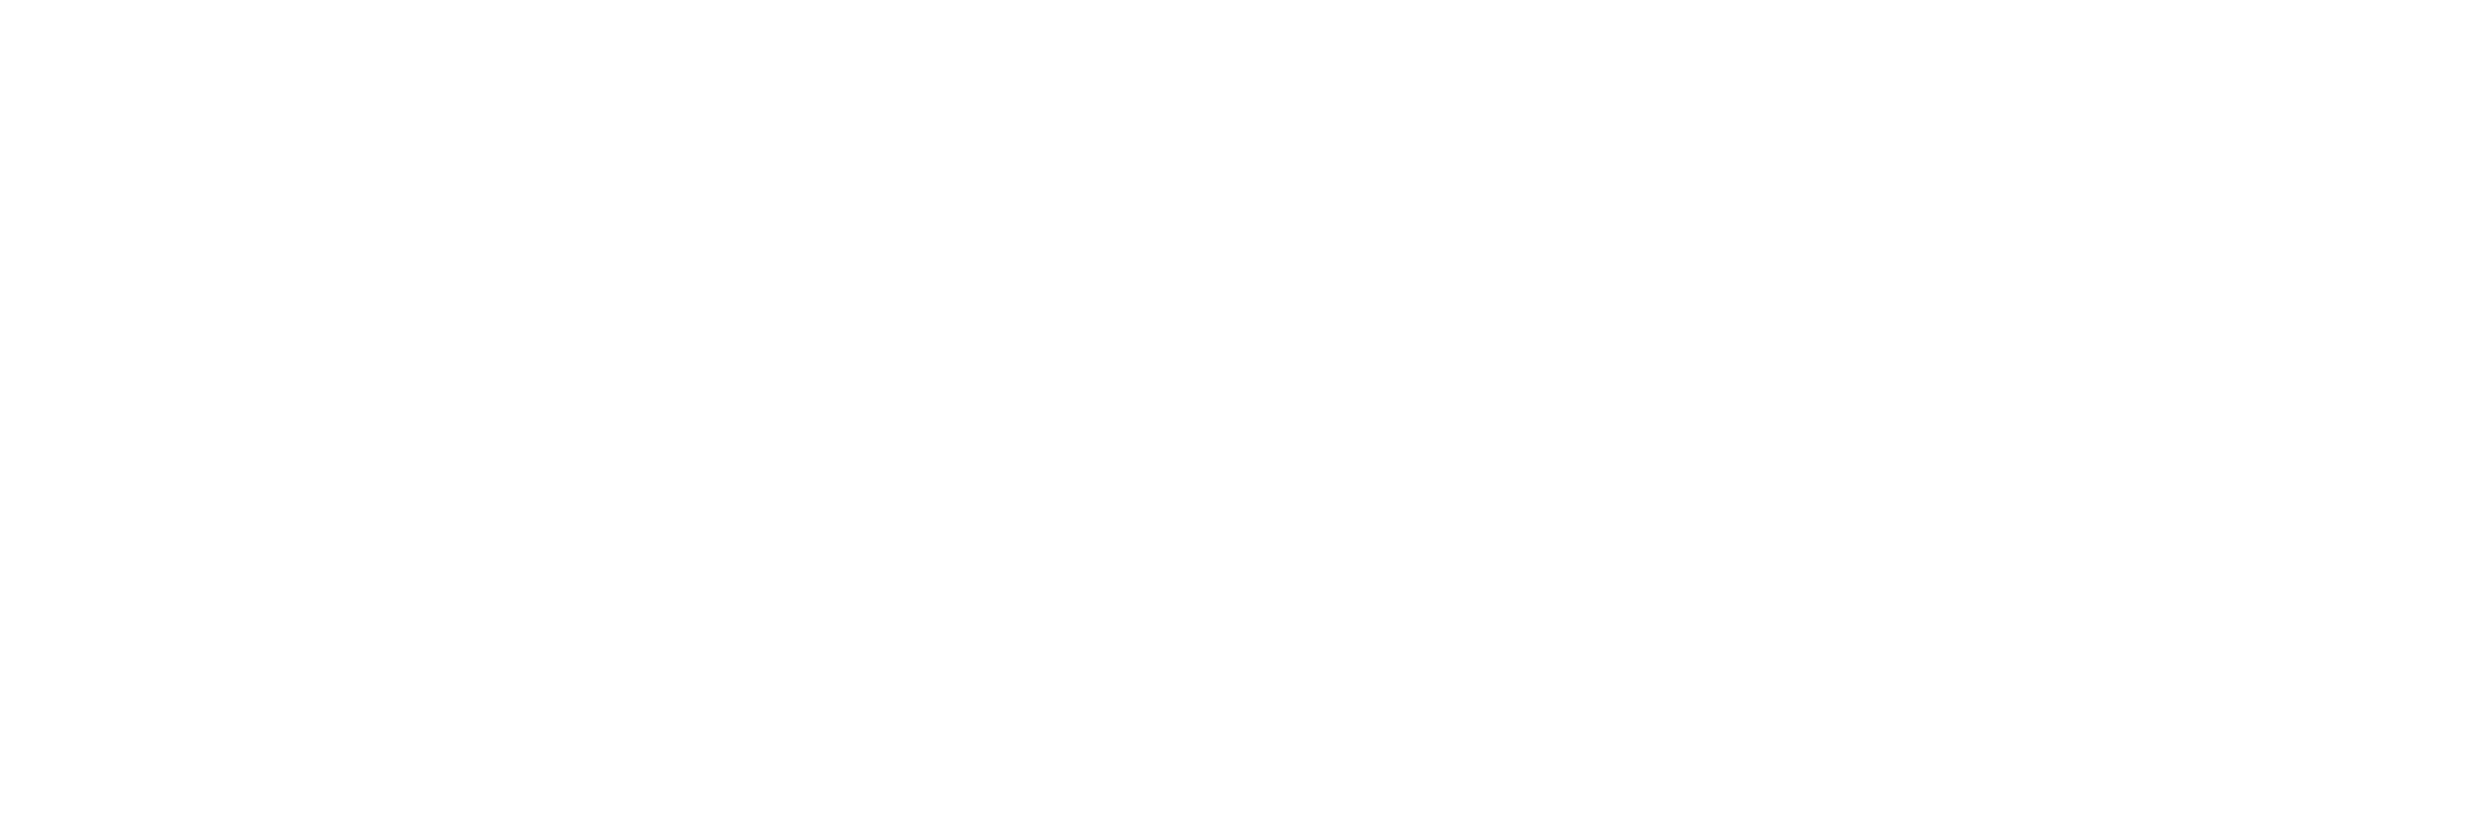 How to update the SWIPEBY App?